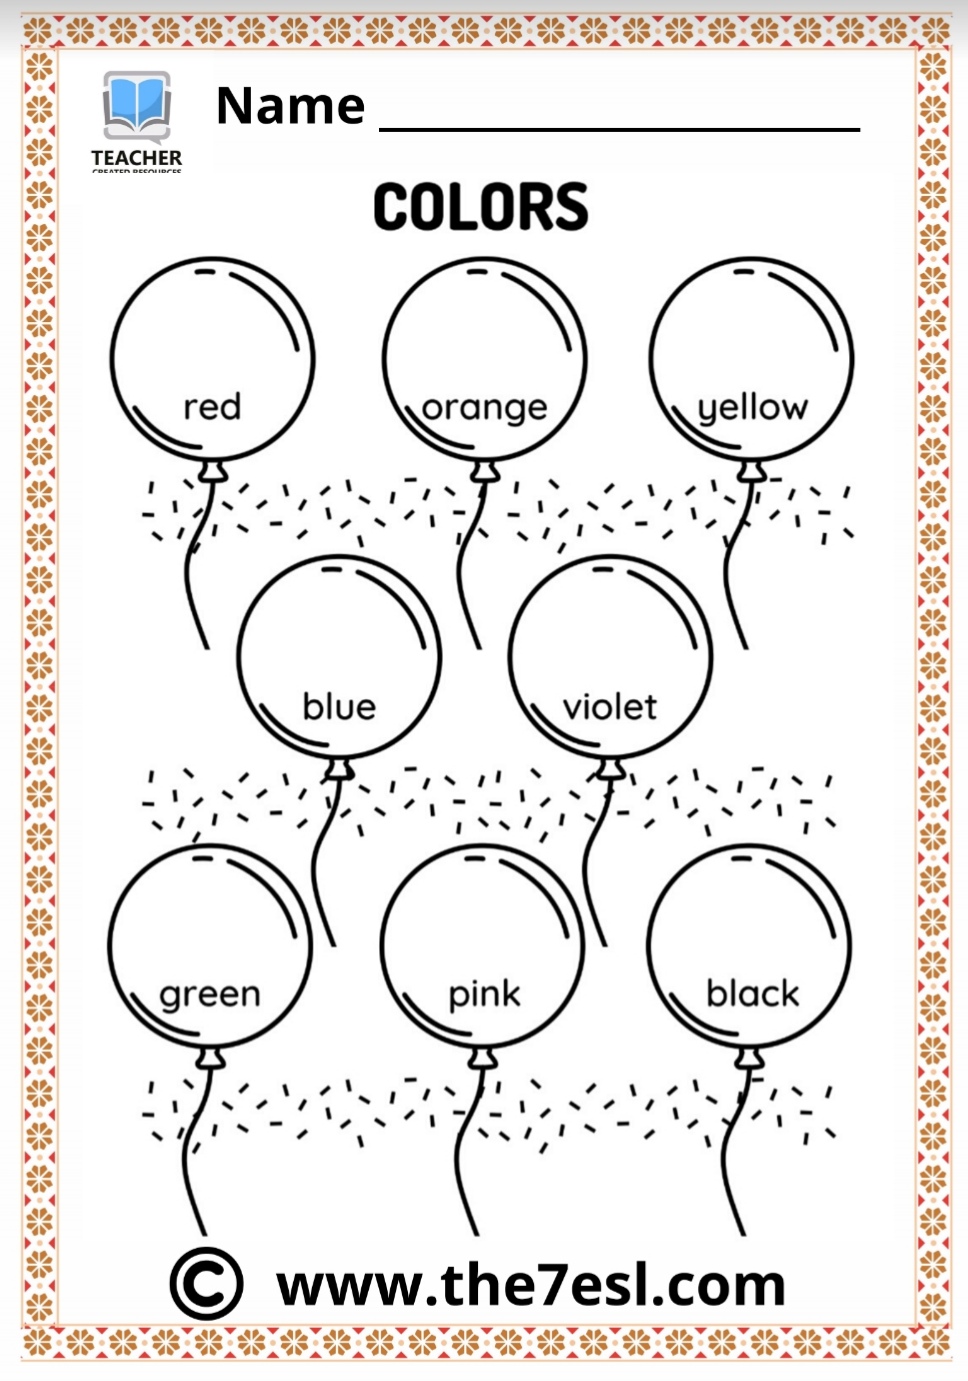 colours-for-preschoolers-esl-worksheet-by-cpmf